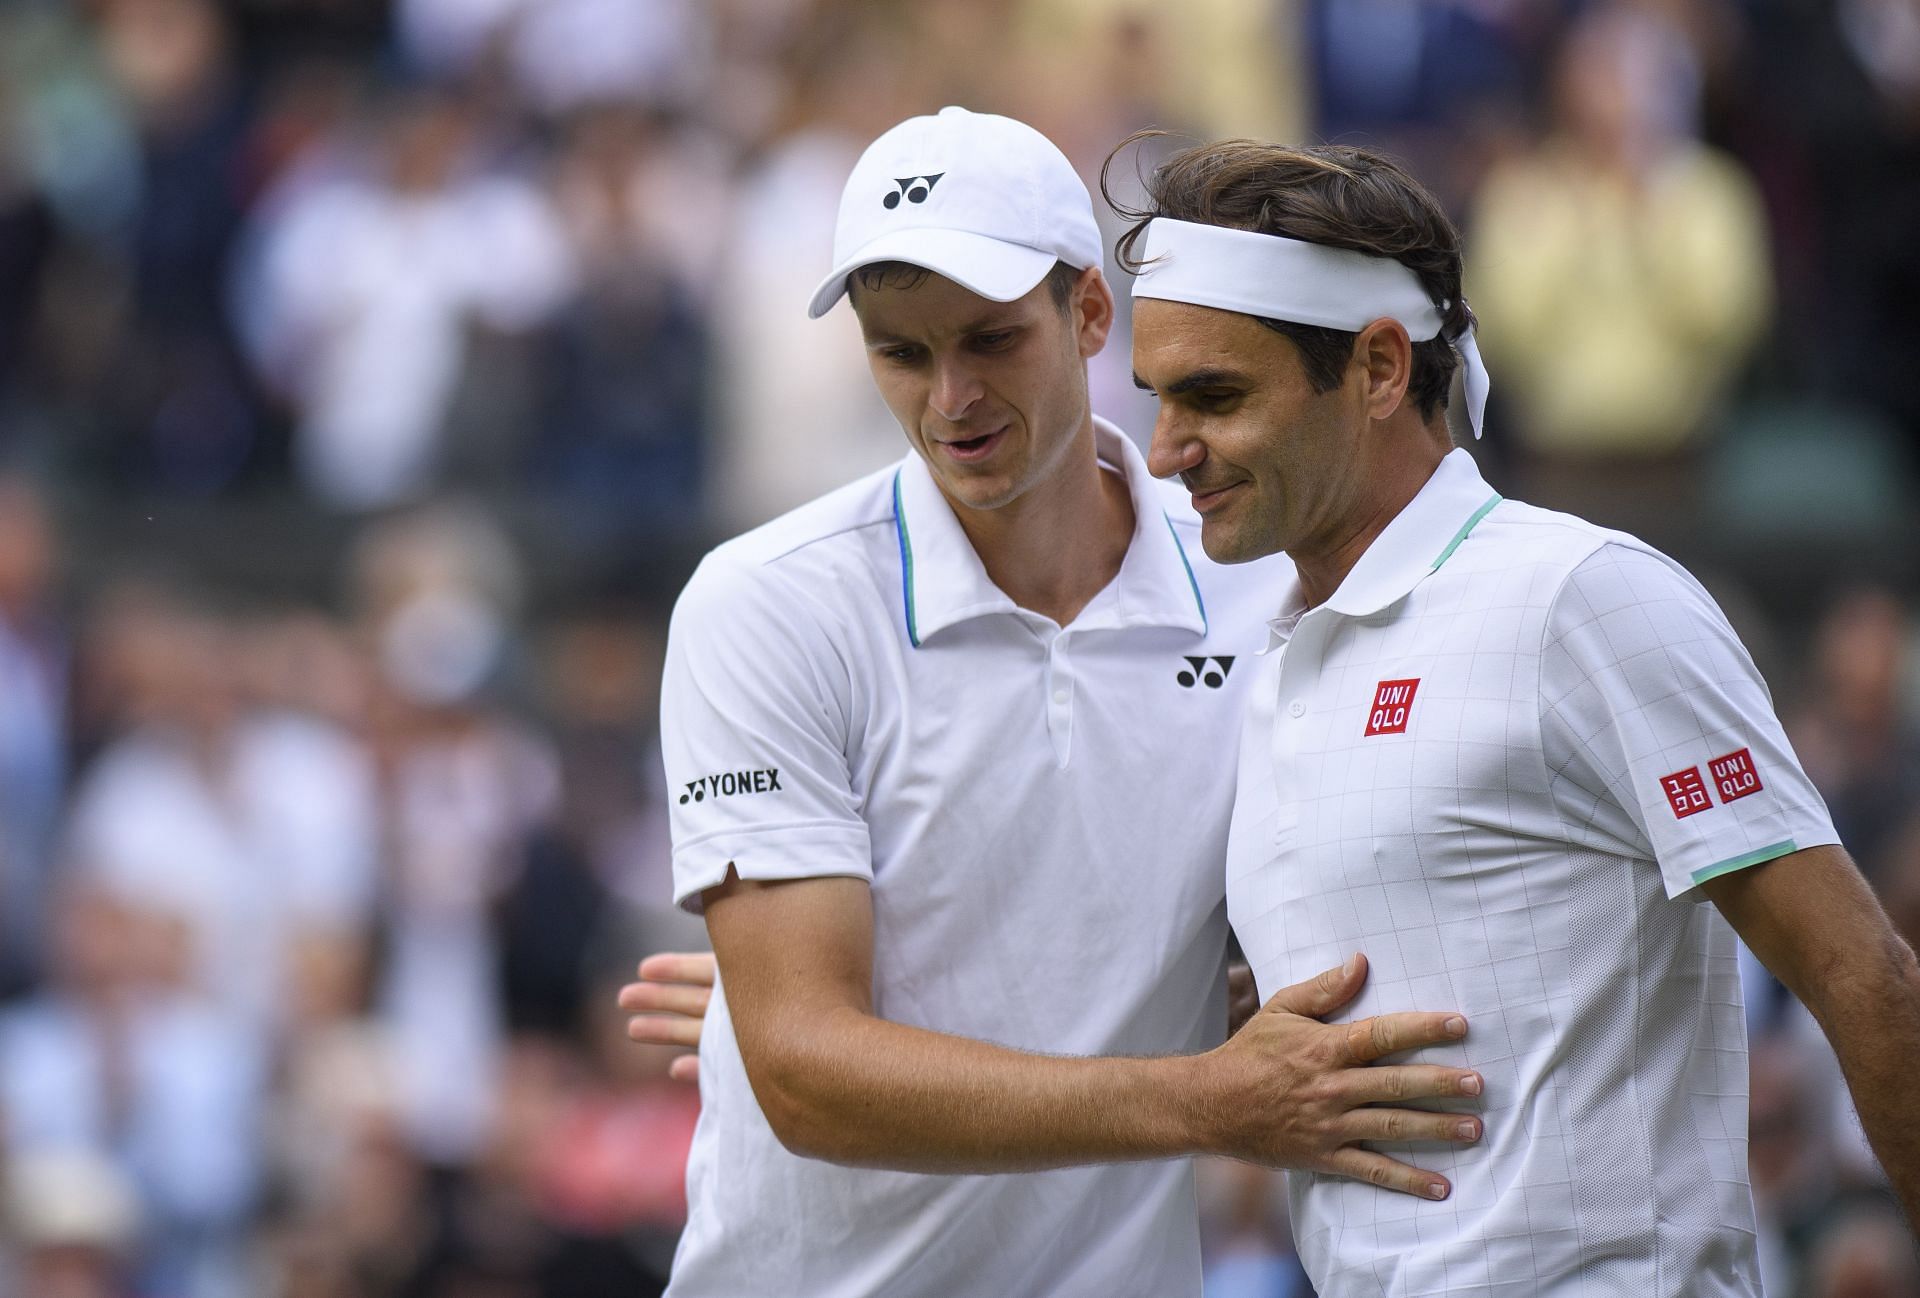 Hubert Hurkacz and Roger Federer sharing an exchange at the net following their encounter at Wimbledon